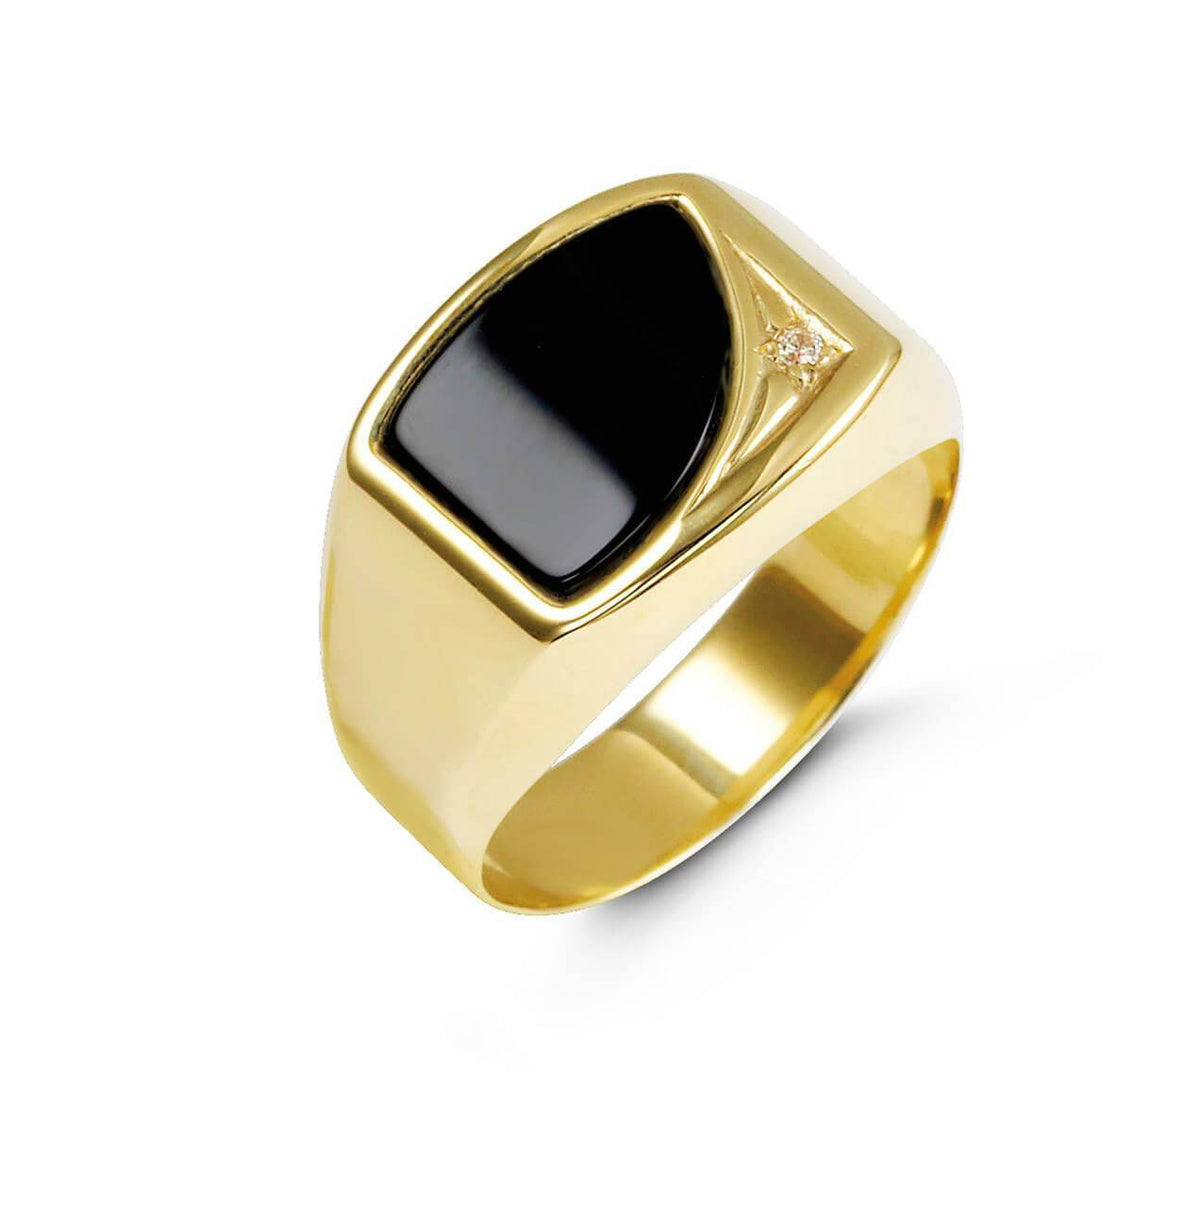 10K Yellow Gold Mens Signet Ring With Black Onyx Stone &amp; CZ Stone